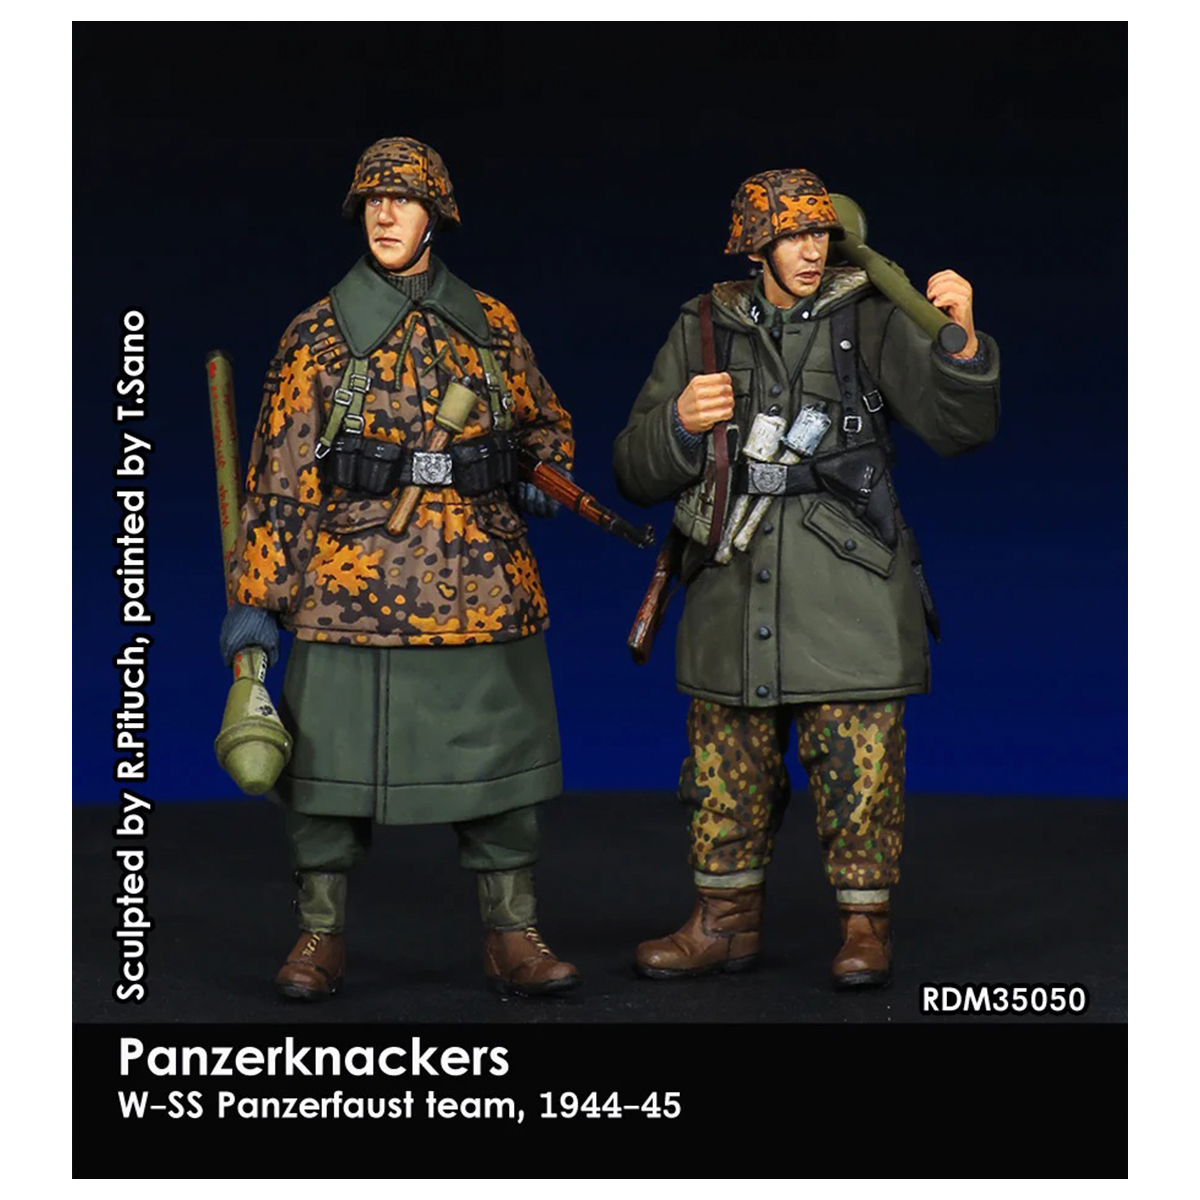 W-SS Panzerfausts team 1/35 (2 figures set)